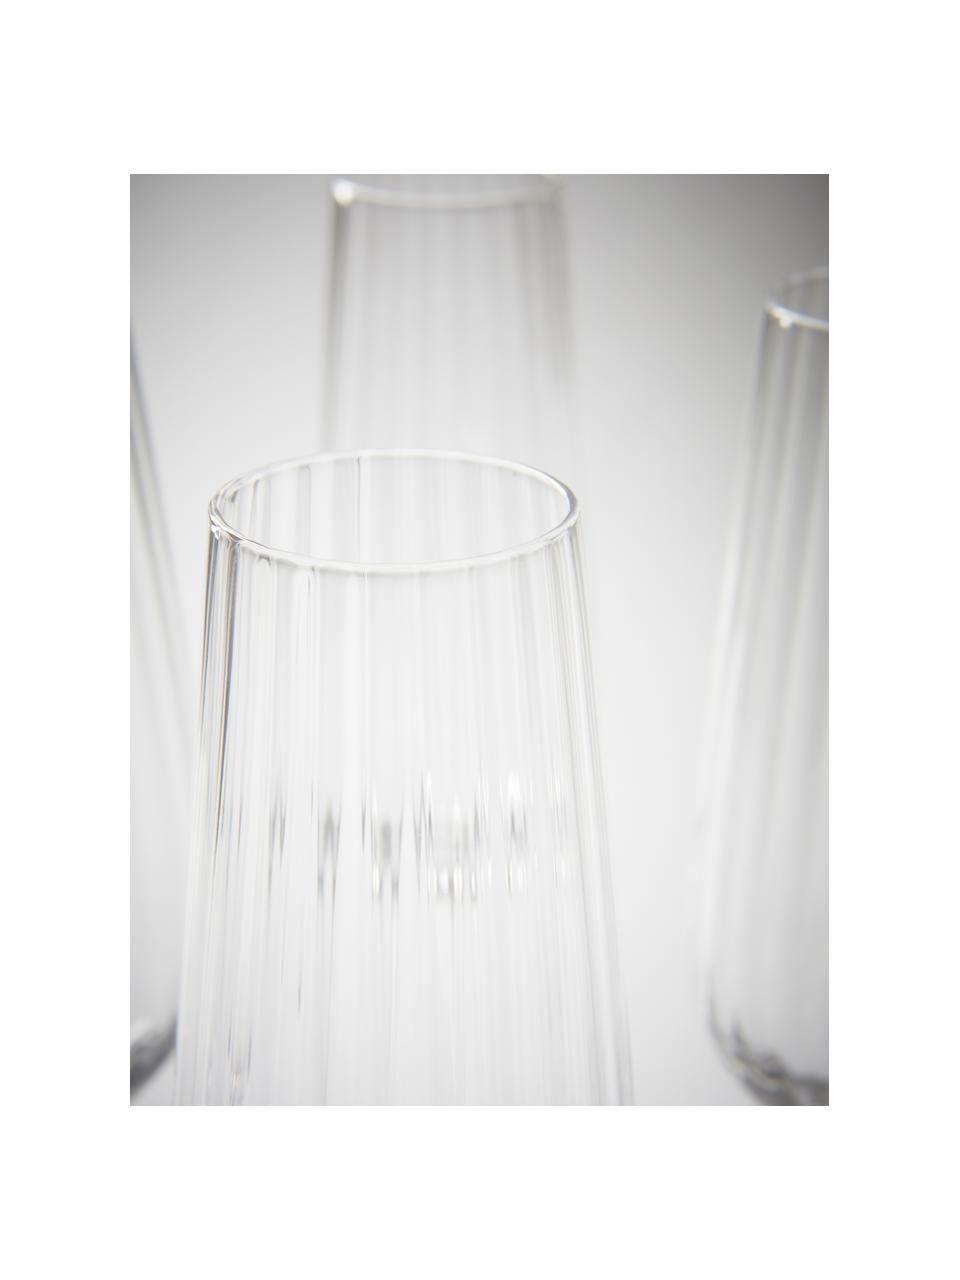 Sektgläser Akia mit Rillenstruktur, 4 Stück, Glas, Transparent, Ø 7 x H 25 cm